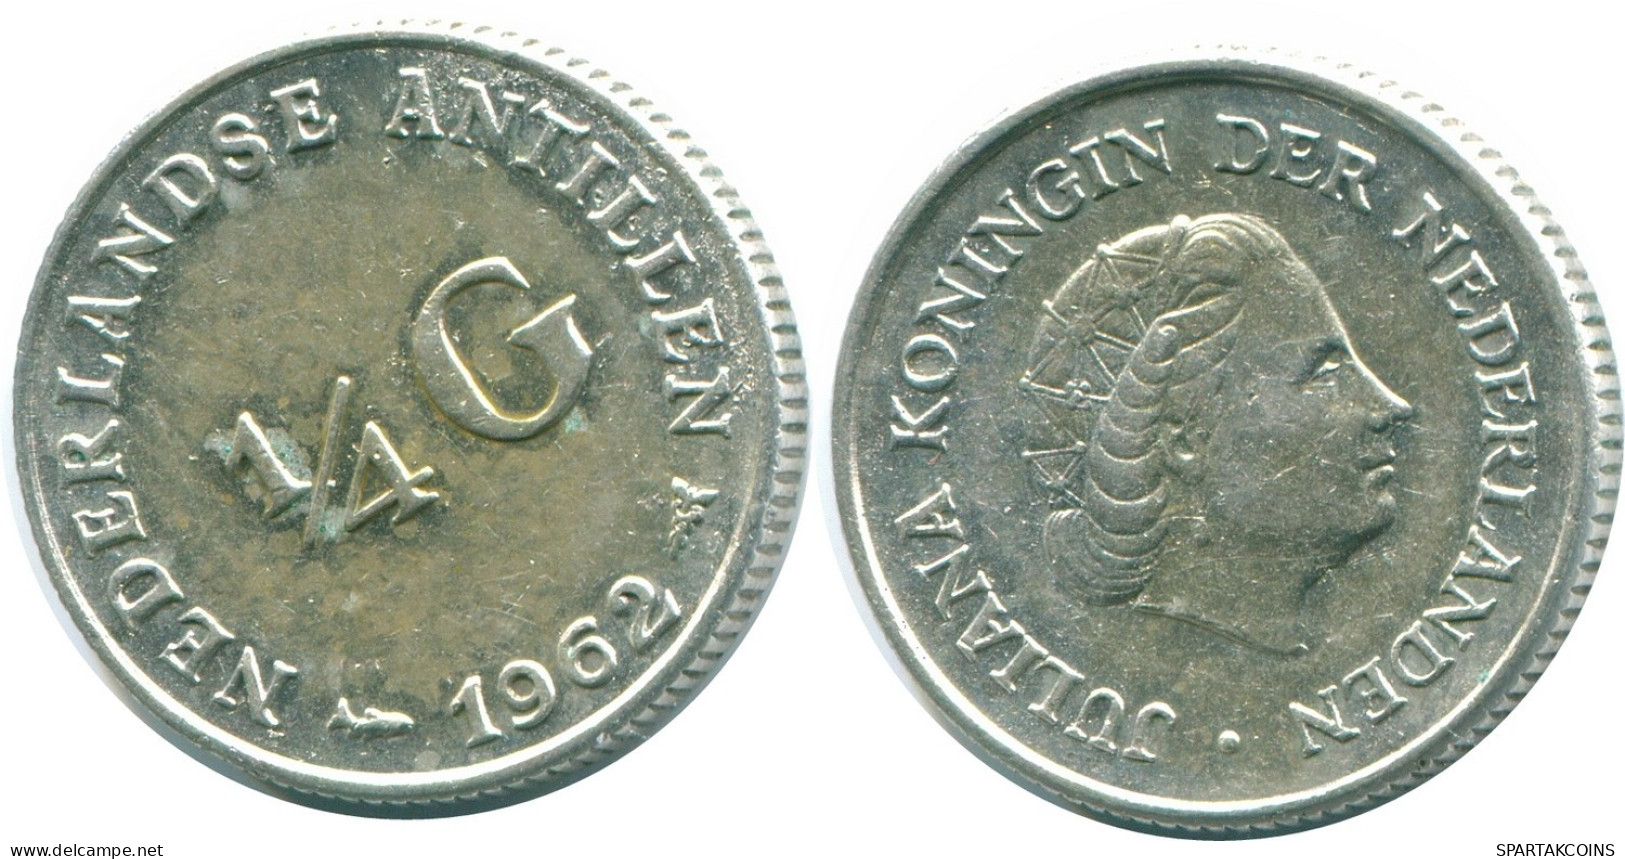 1/4 GULDEN 1962 NETHERLANDS ANTILLES SILVER Colonial Coin #NL11105.4.U.A - Netherlands Antilles